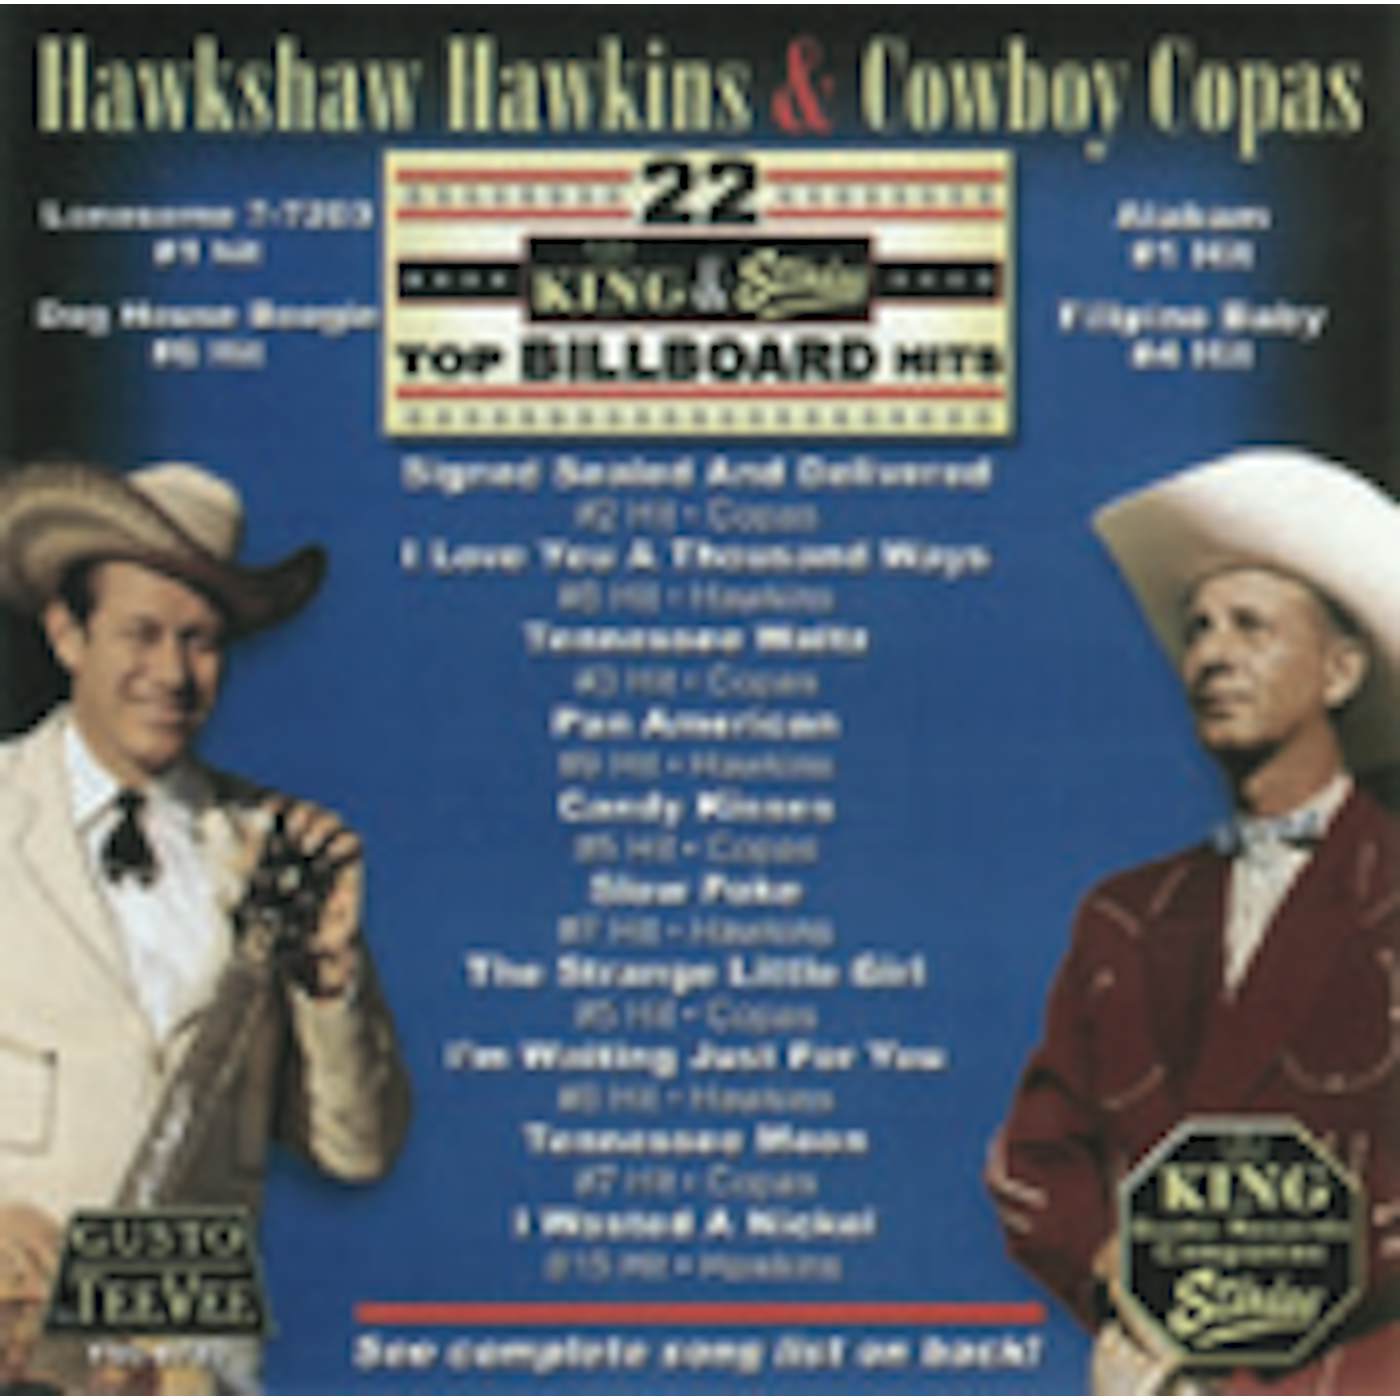 Hawkshaw Hawkins 22 KING & STARDAY TOP BILLBOARD HITS CD